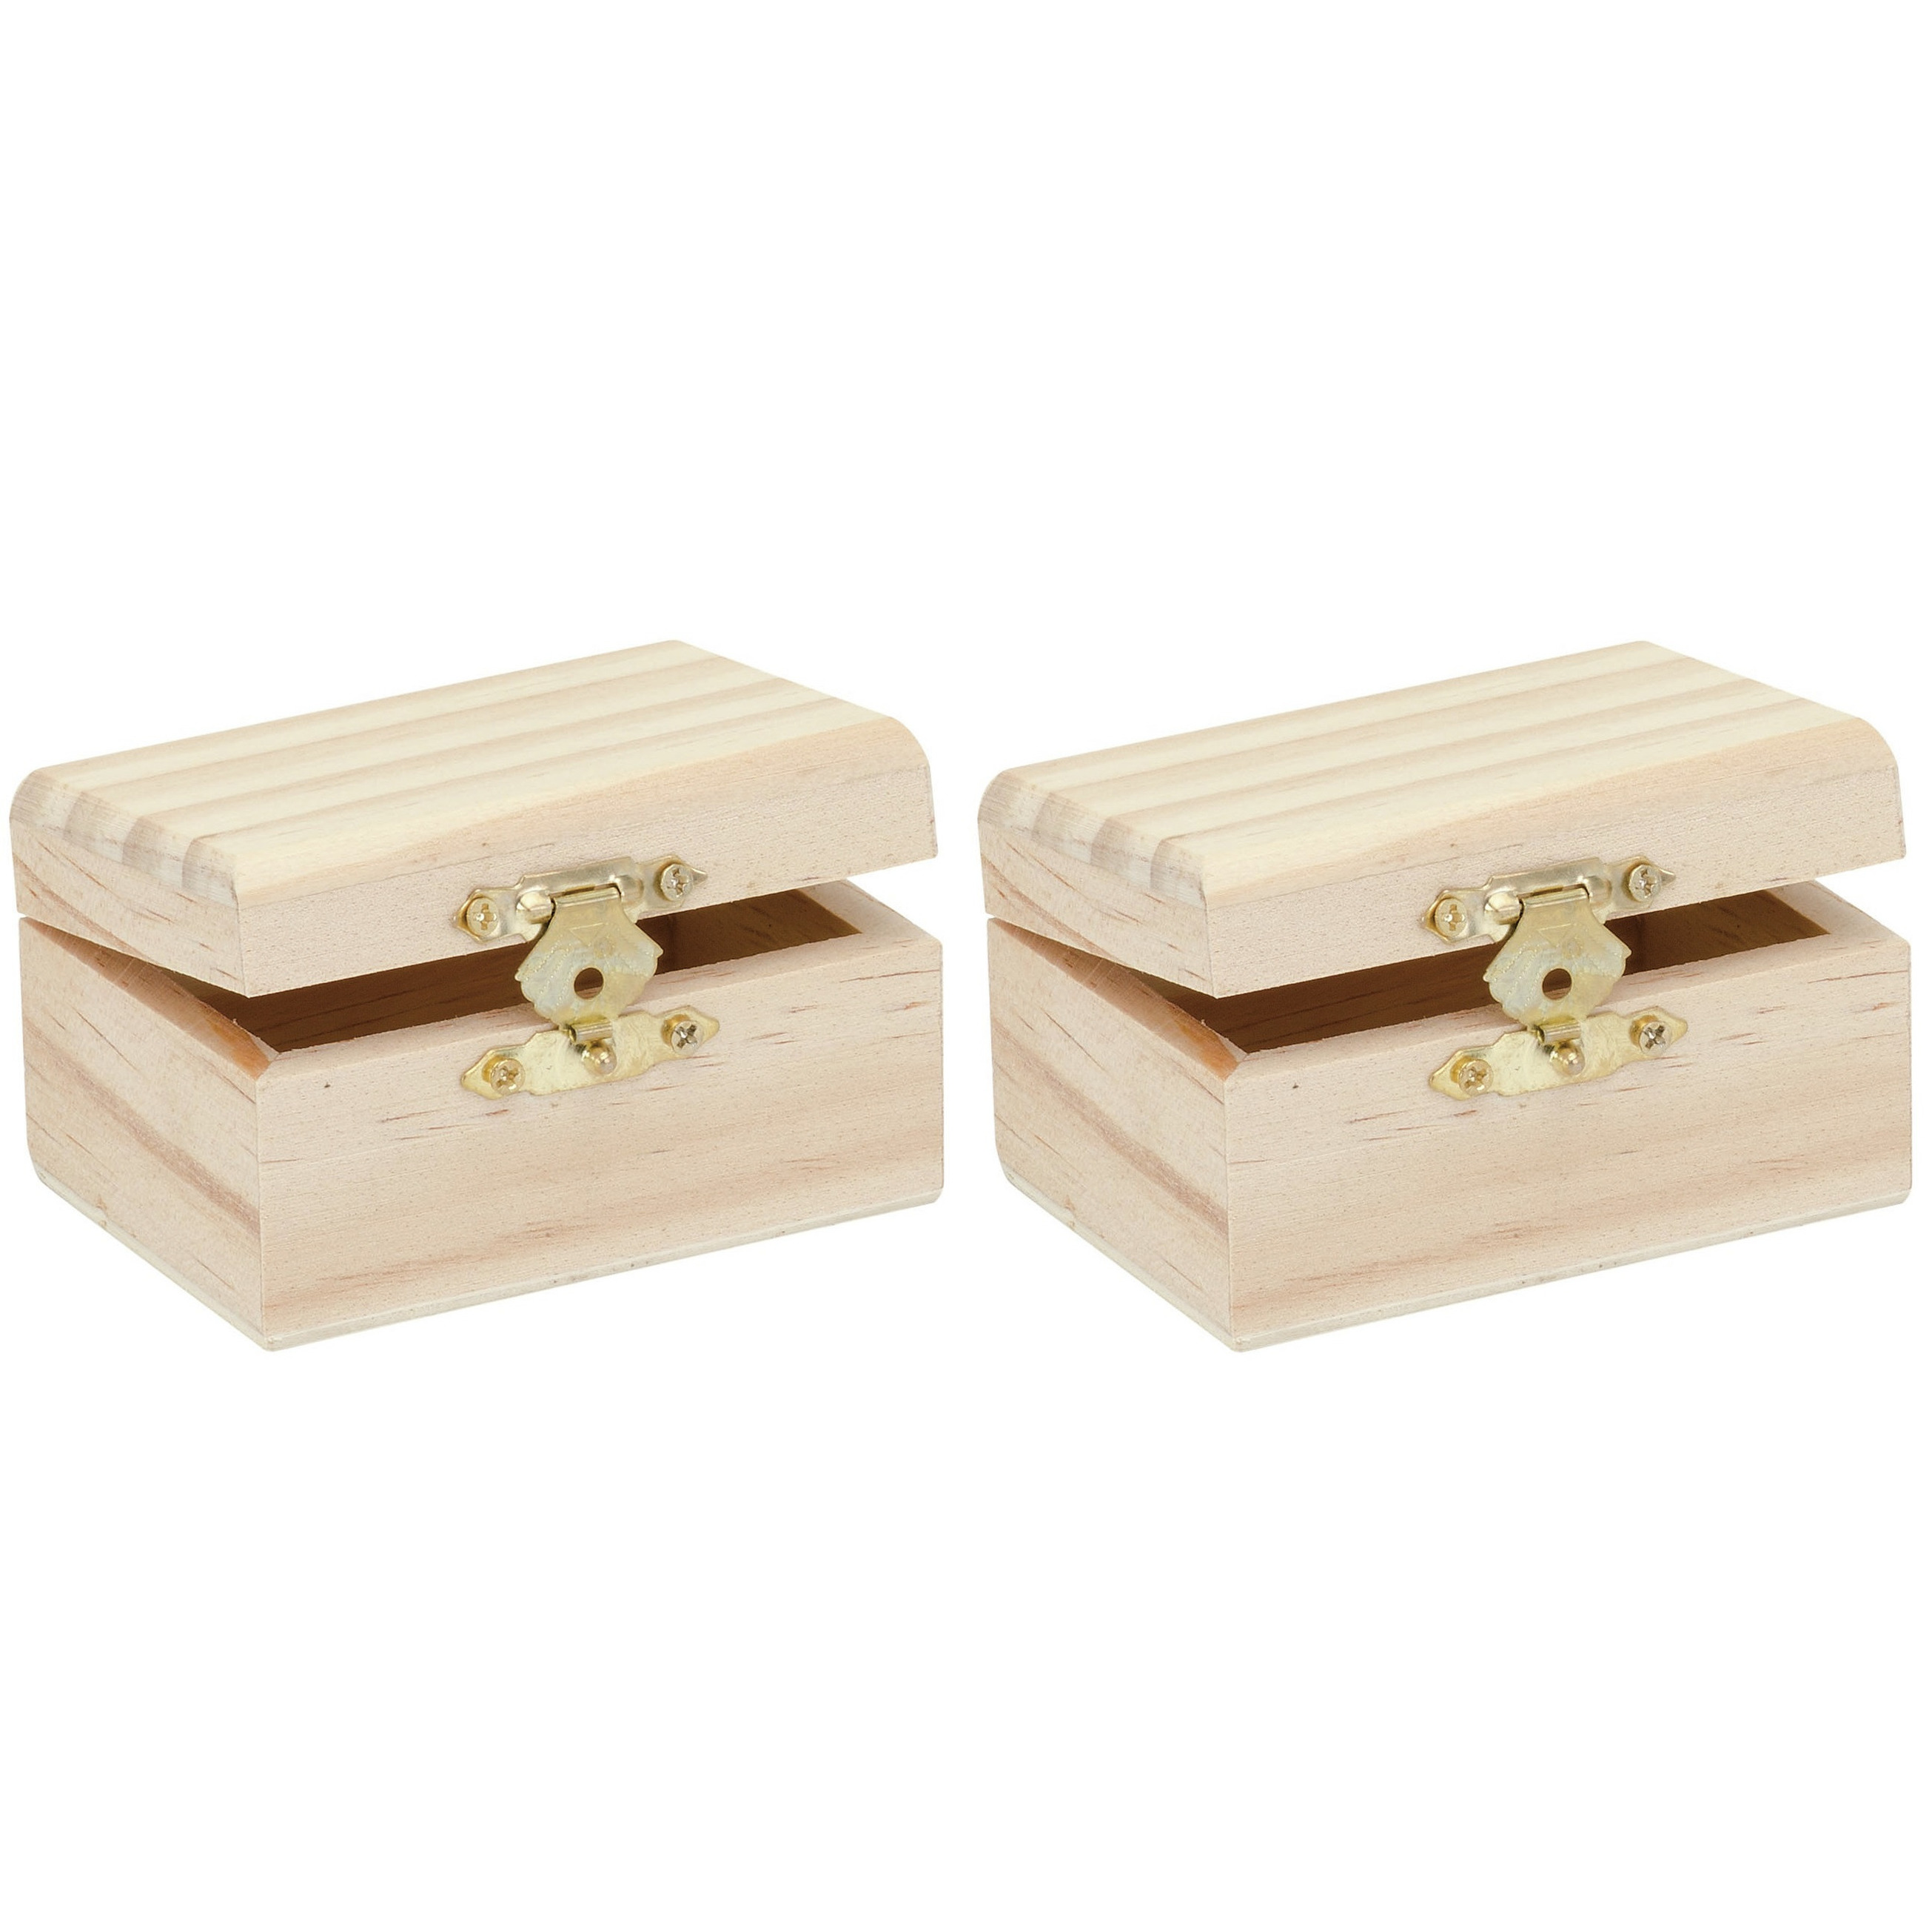 6x stuks klein houten kistje rechthoek 8 x 5.5 x 4.5 cm -